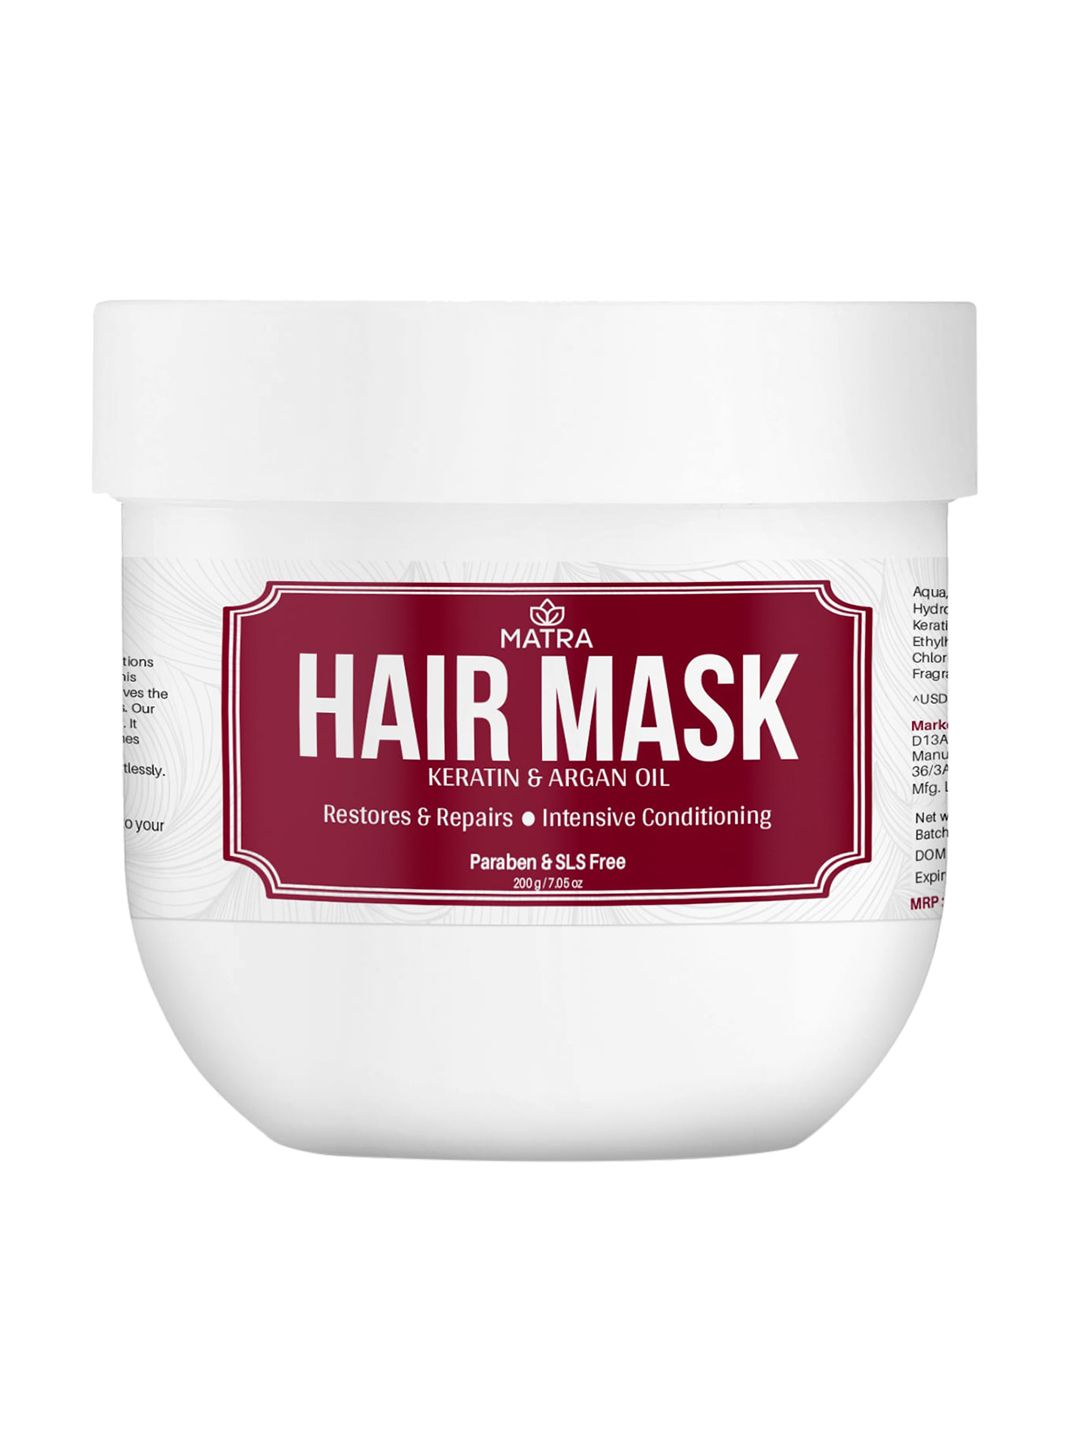 MATRA Keratin & Argan Oil Hair Mask - 200 g Price in India